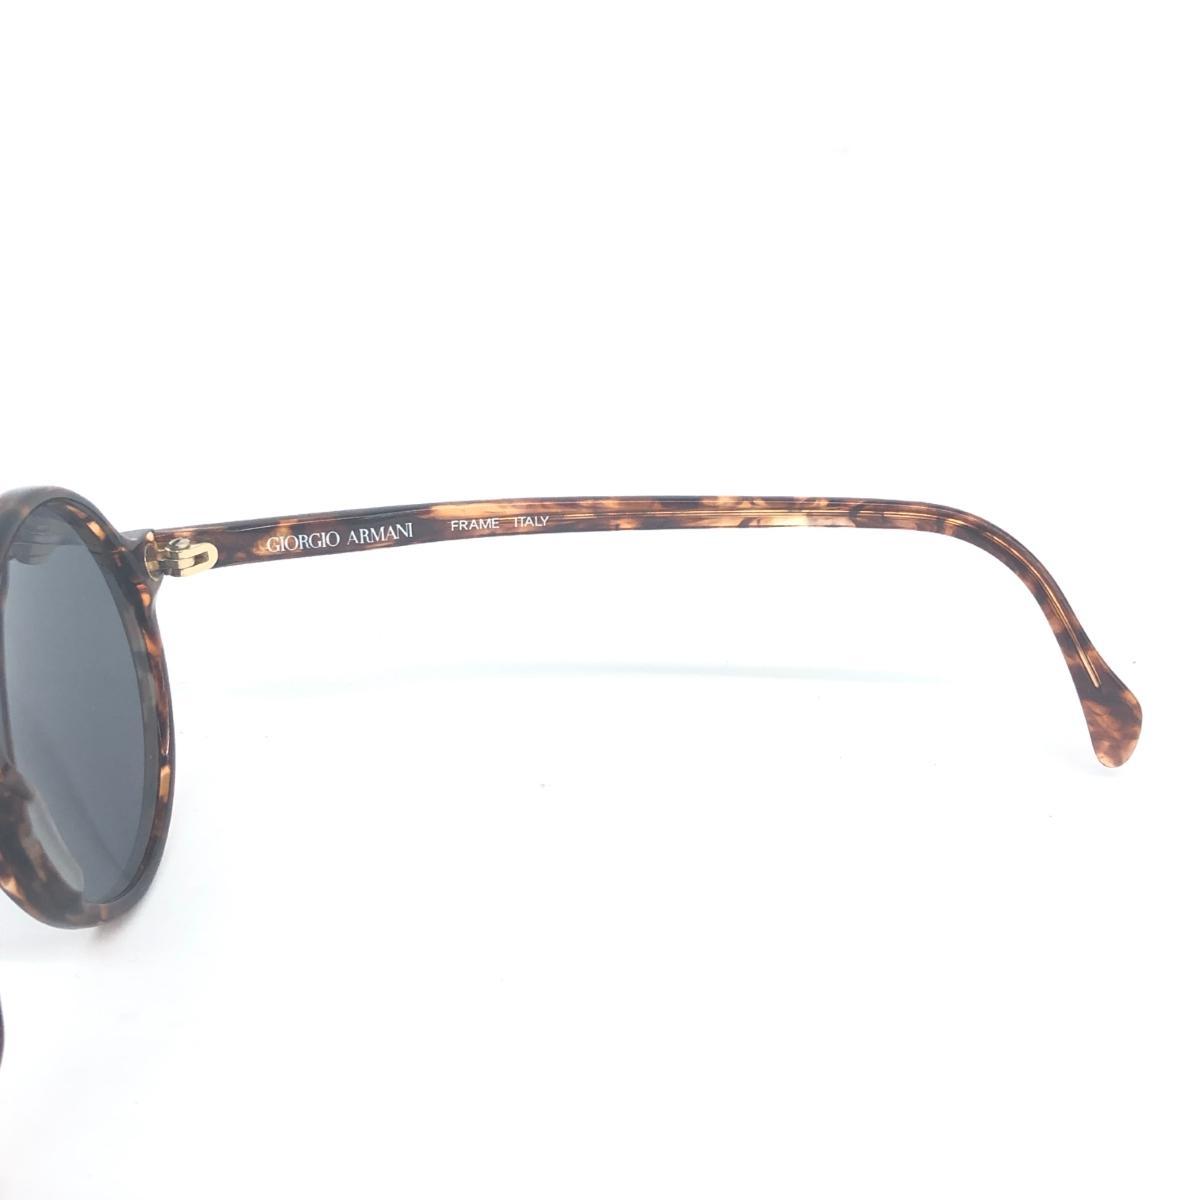 ◆GIORGIO ARMANI ジョルジオアルマーニ サングラス◆304 013 ブラウン ラウンド型 ユニセックス イタリア製 メガネ sunglasses 服飾小物_画像6